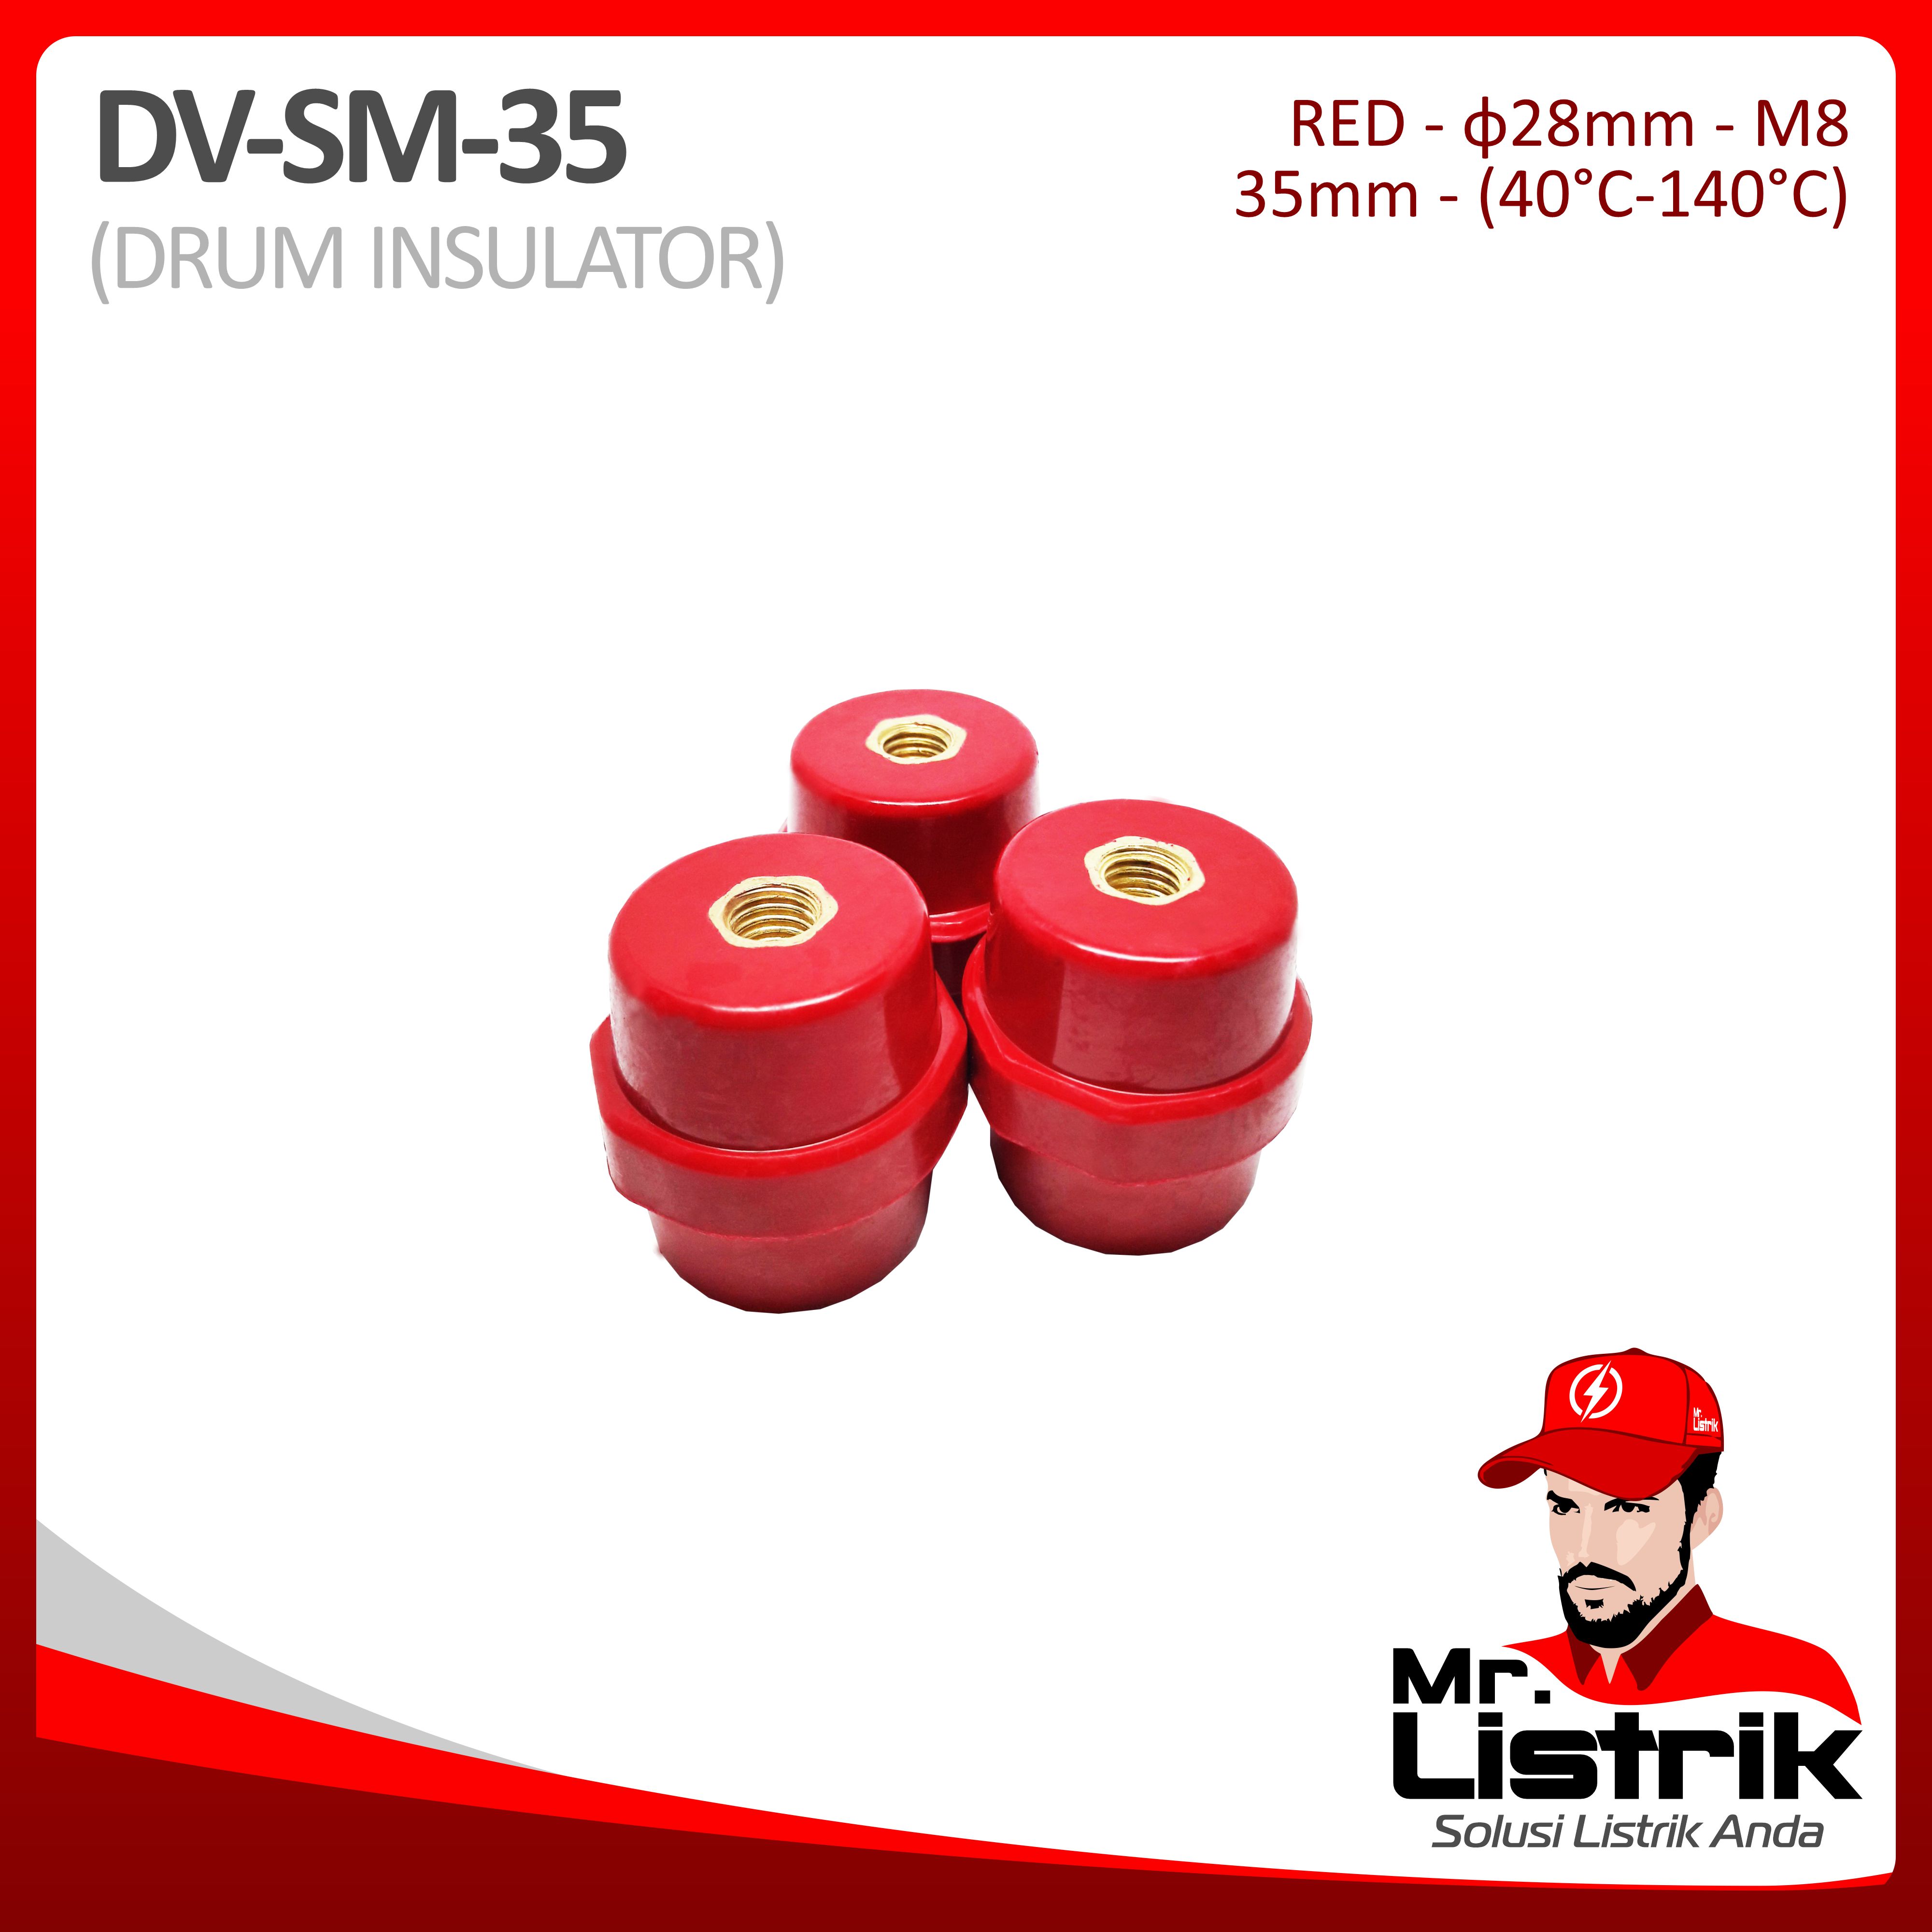 Drum Insulator Rekolit DV SM-35